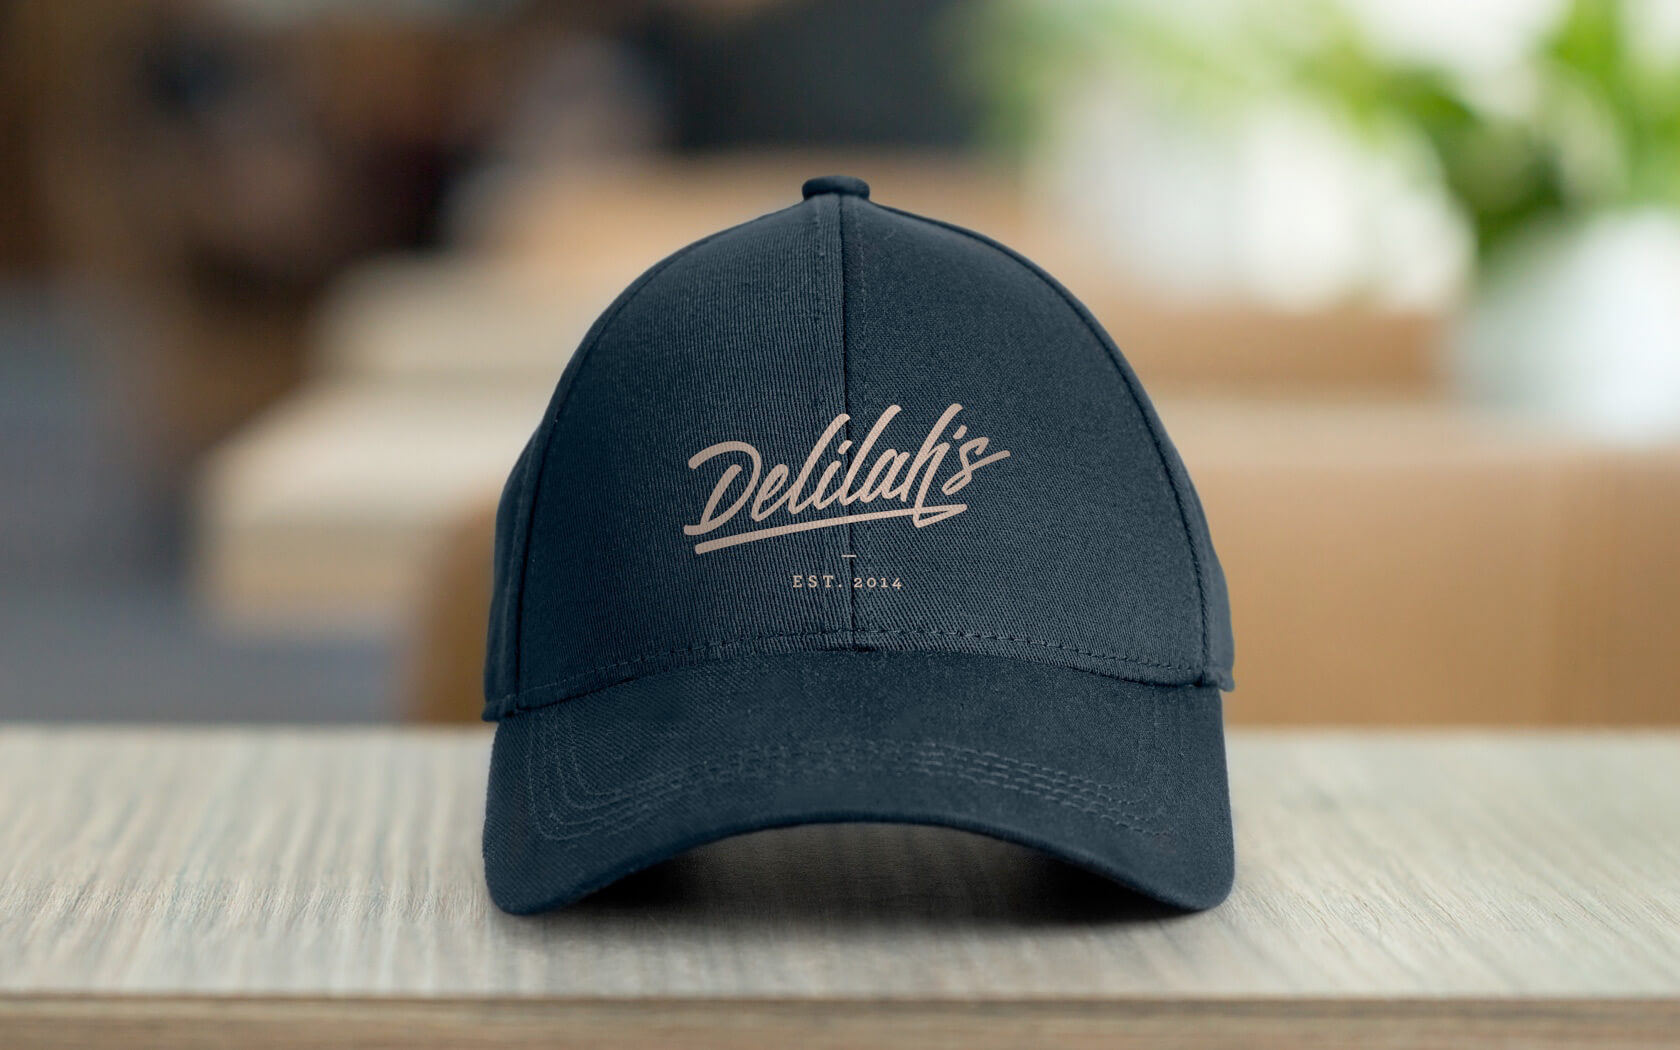 Delilah’s. Cap branding